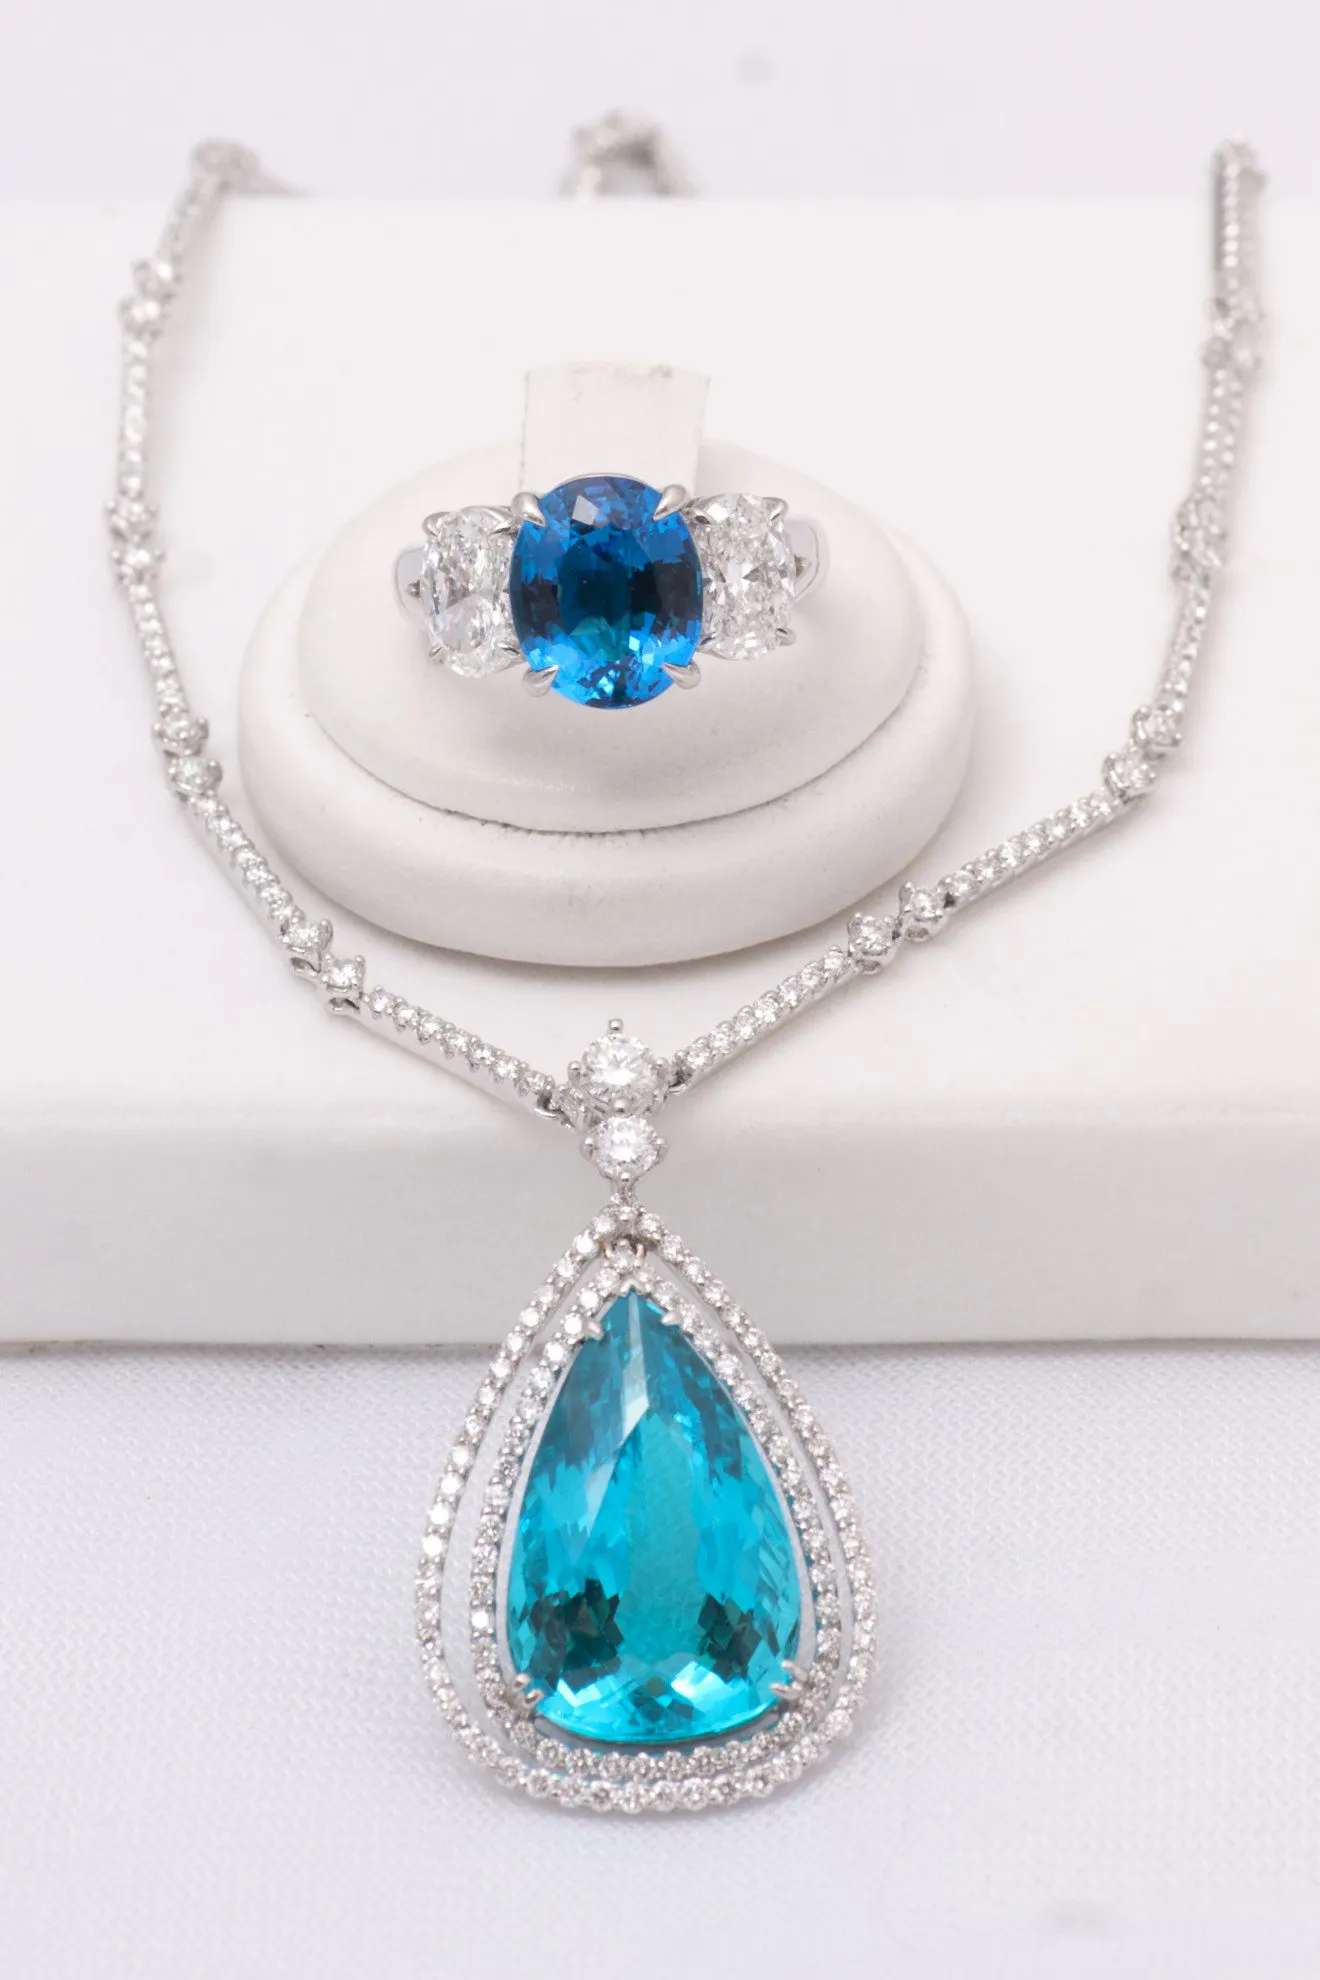 blue gemstones - paraiba ring and necklace